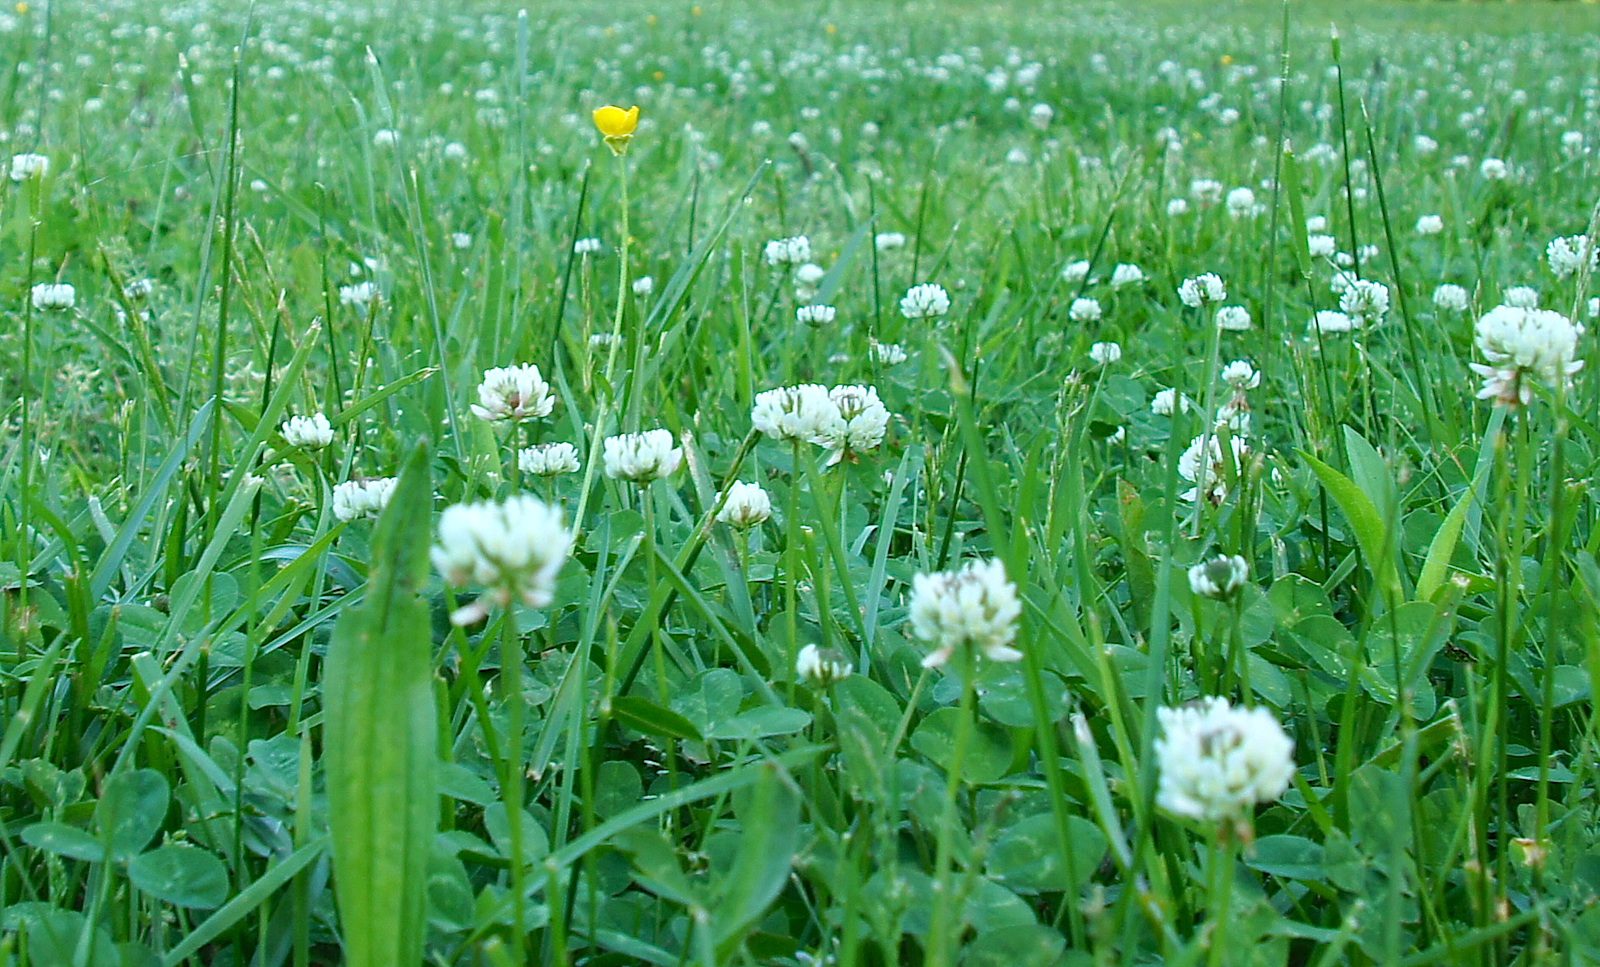 Pasture grass